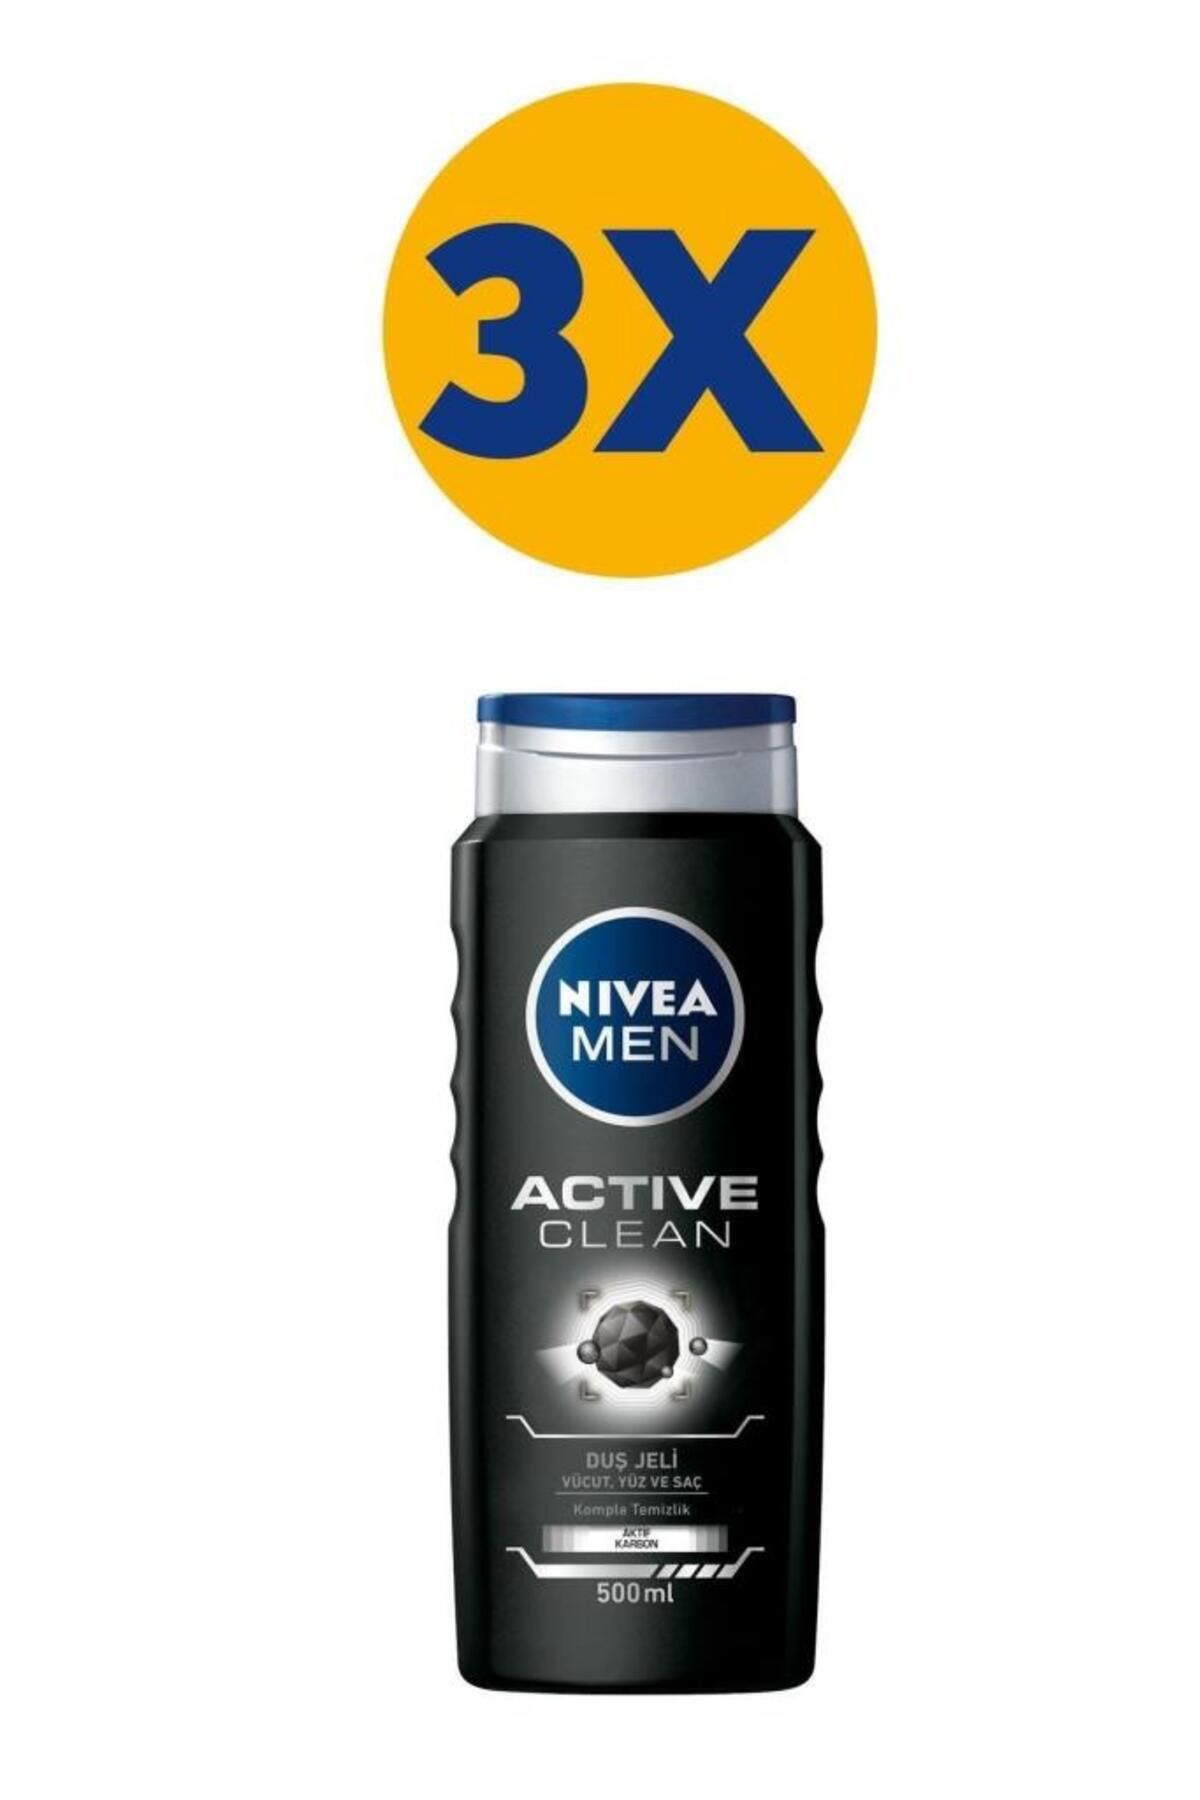 NIVEA MEN Erkek Duş Jeli Active Clean 500ml, Saç Yüz Vücut, 24 Saat Ferahlık, Aktif Karbon, Erkeksi Koku